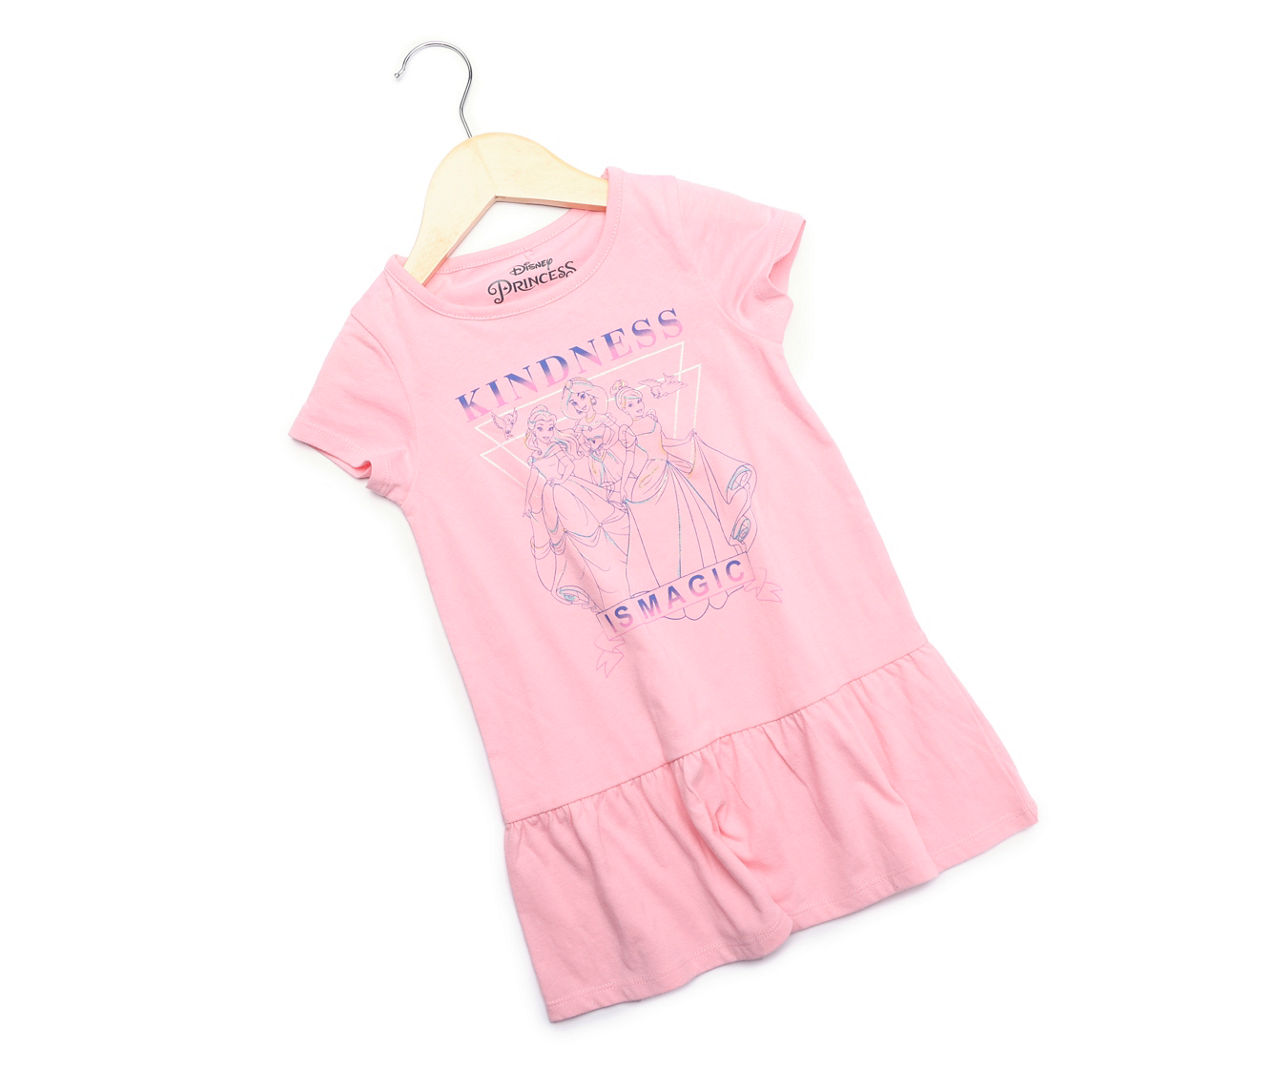 Toddler Size 3T "Kindness Is Magic" Pink Princesses Drop-Waist Dress